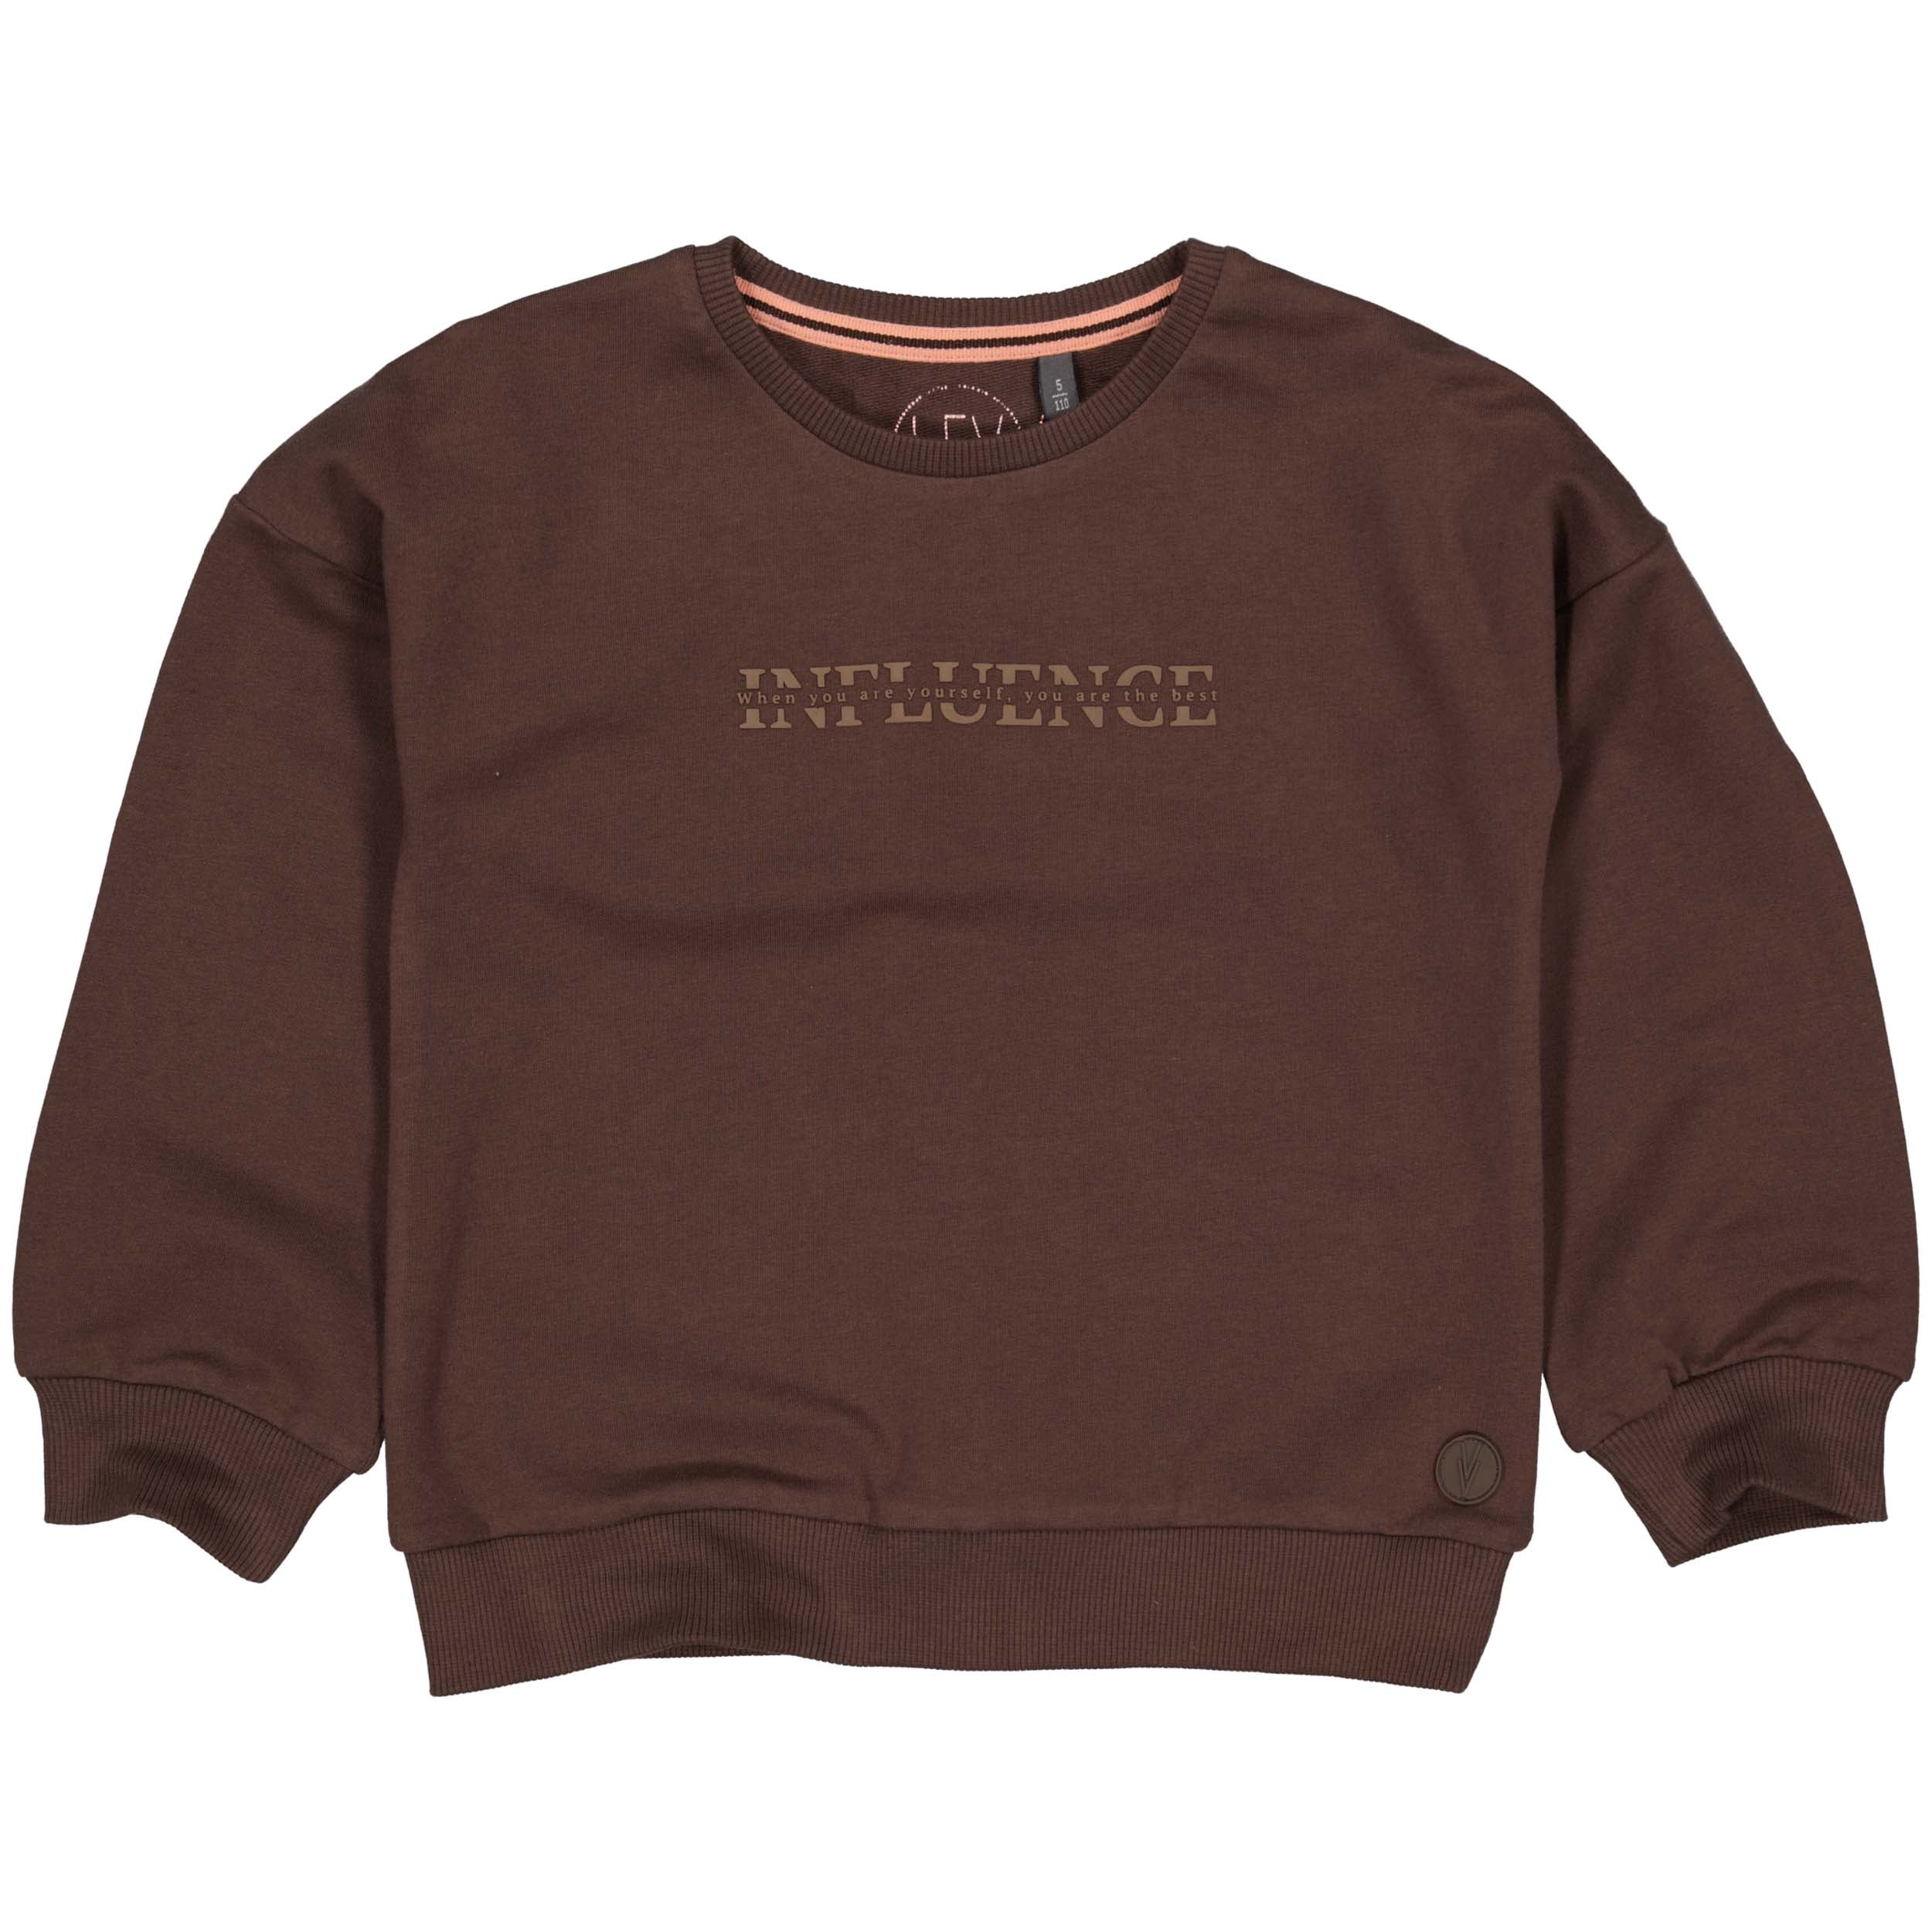 Meisjes Sweater BODILEW222 van Little Levv in de kleur Brown Dark in maat 128.